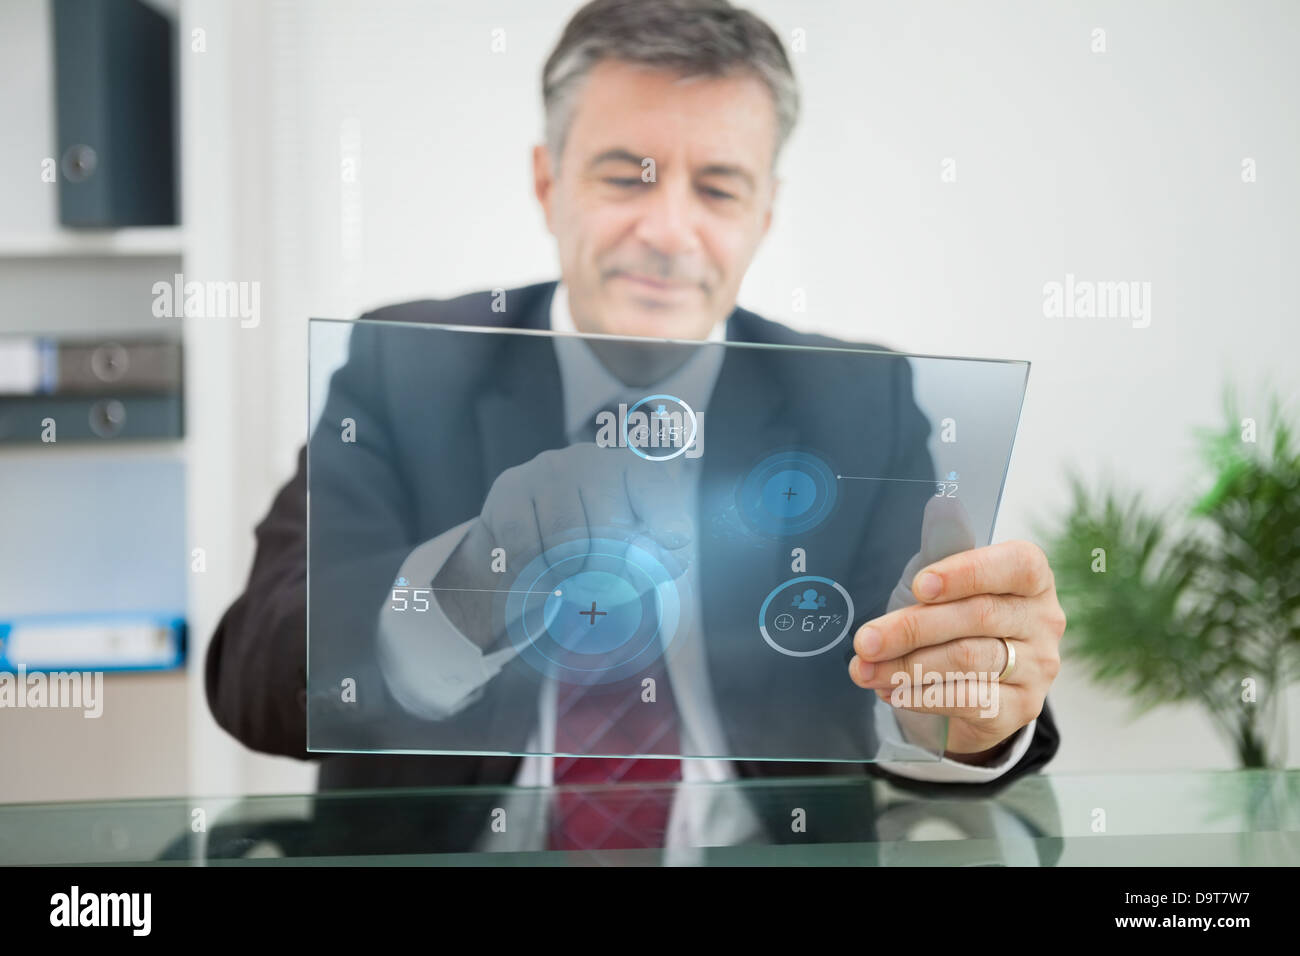 Businessman using futuristic touchscreen to view statistics Stock Photo